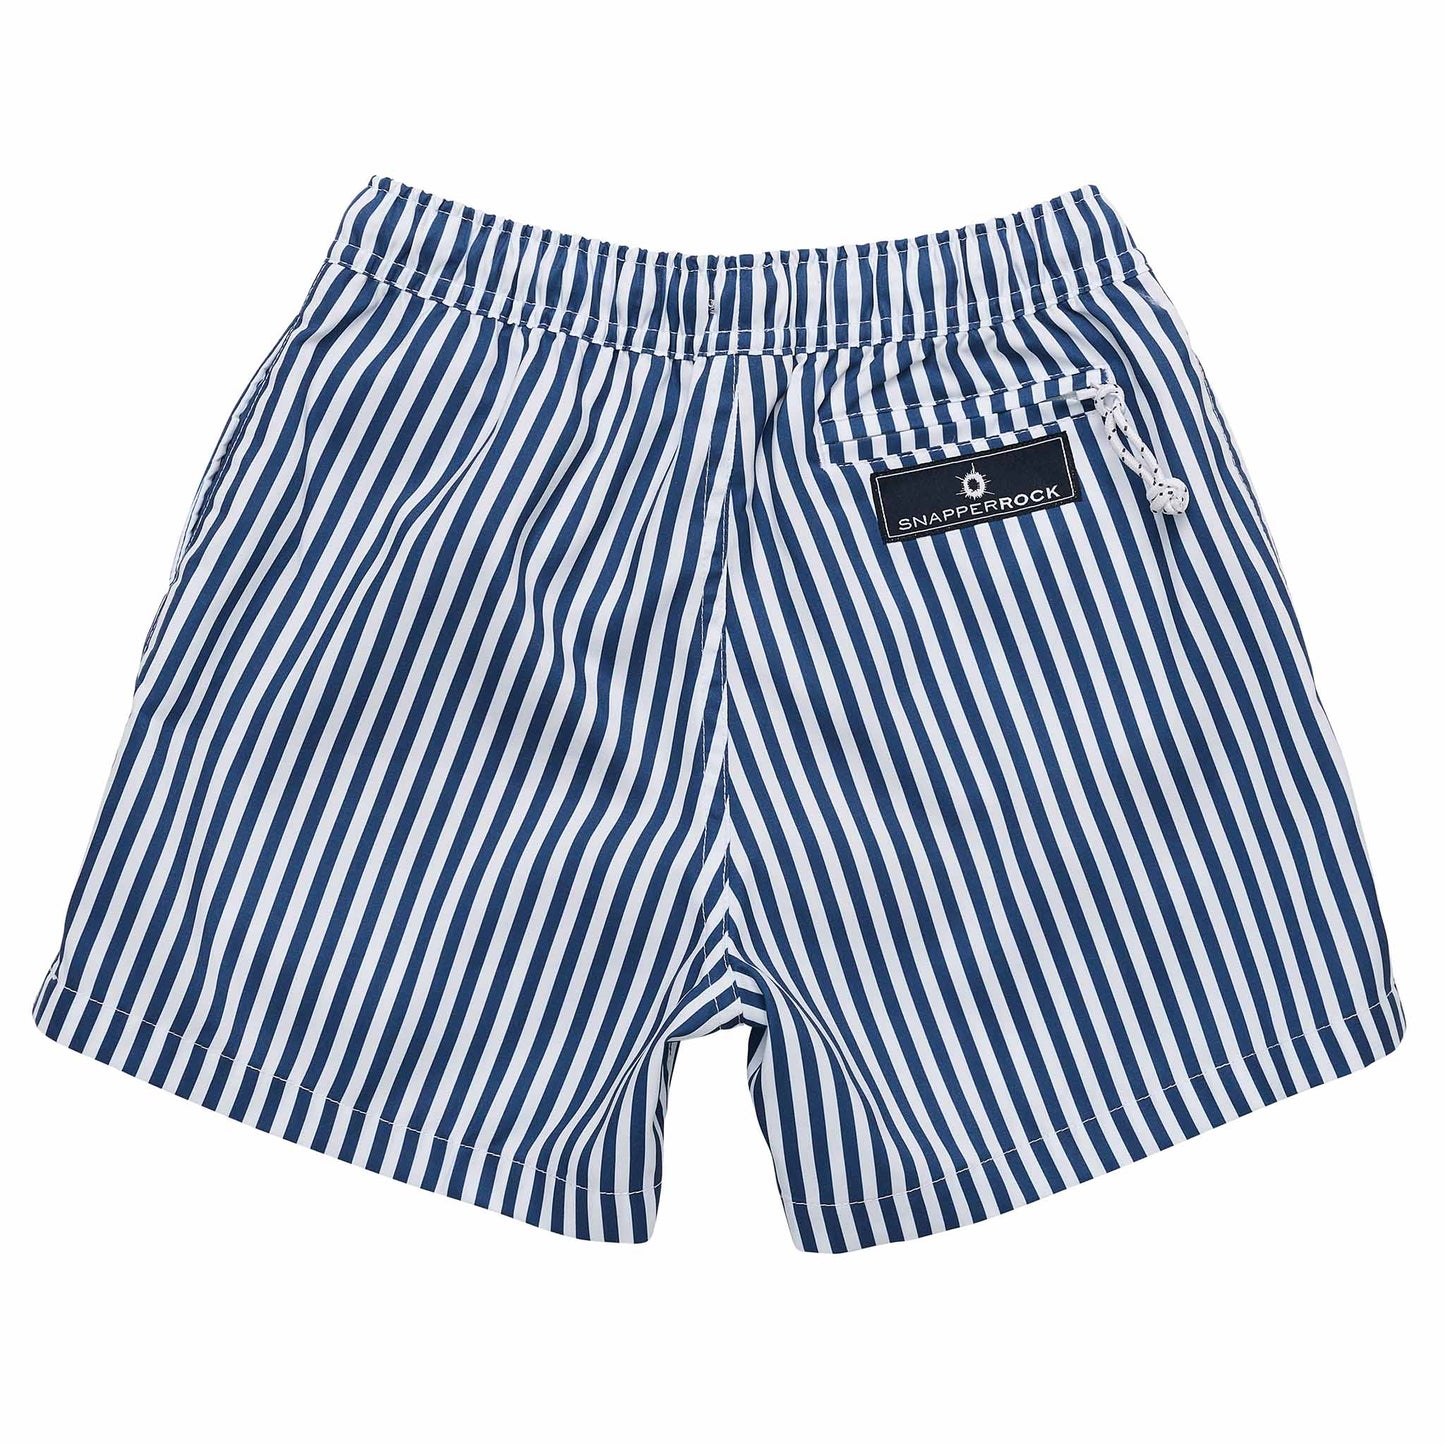 Denim Stripe Comfort Lined Swim Short - Mack & Harvie